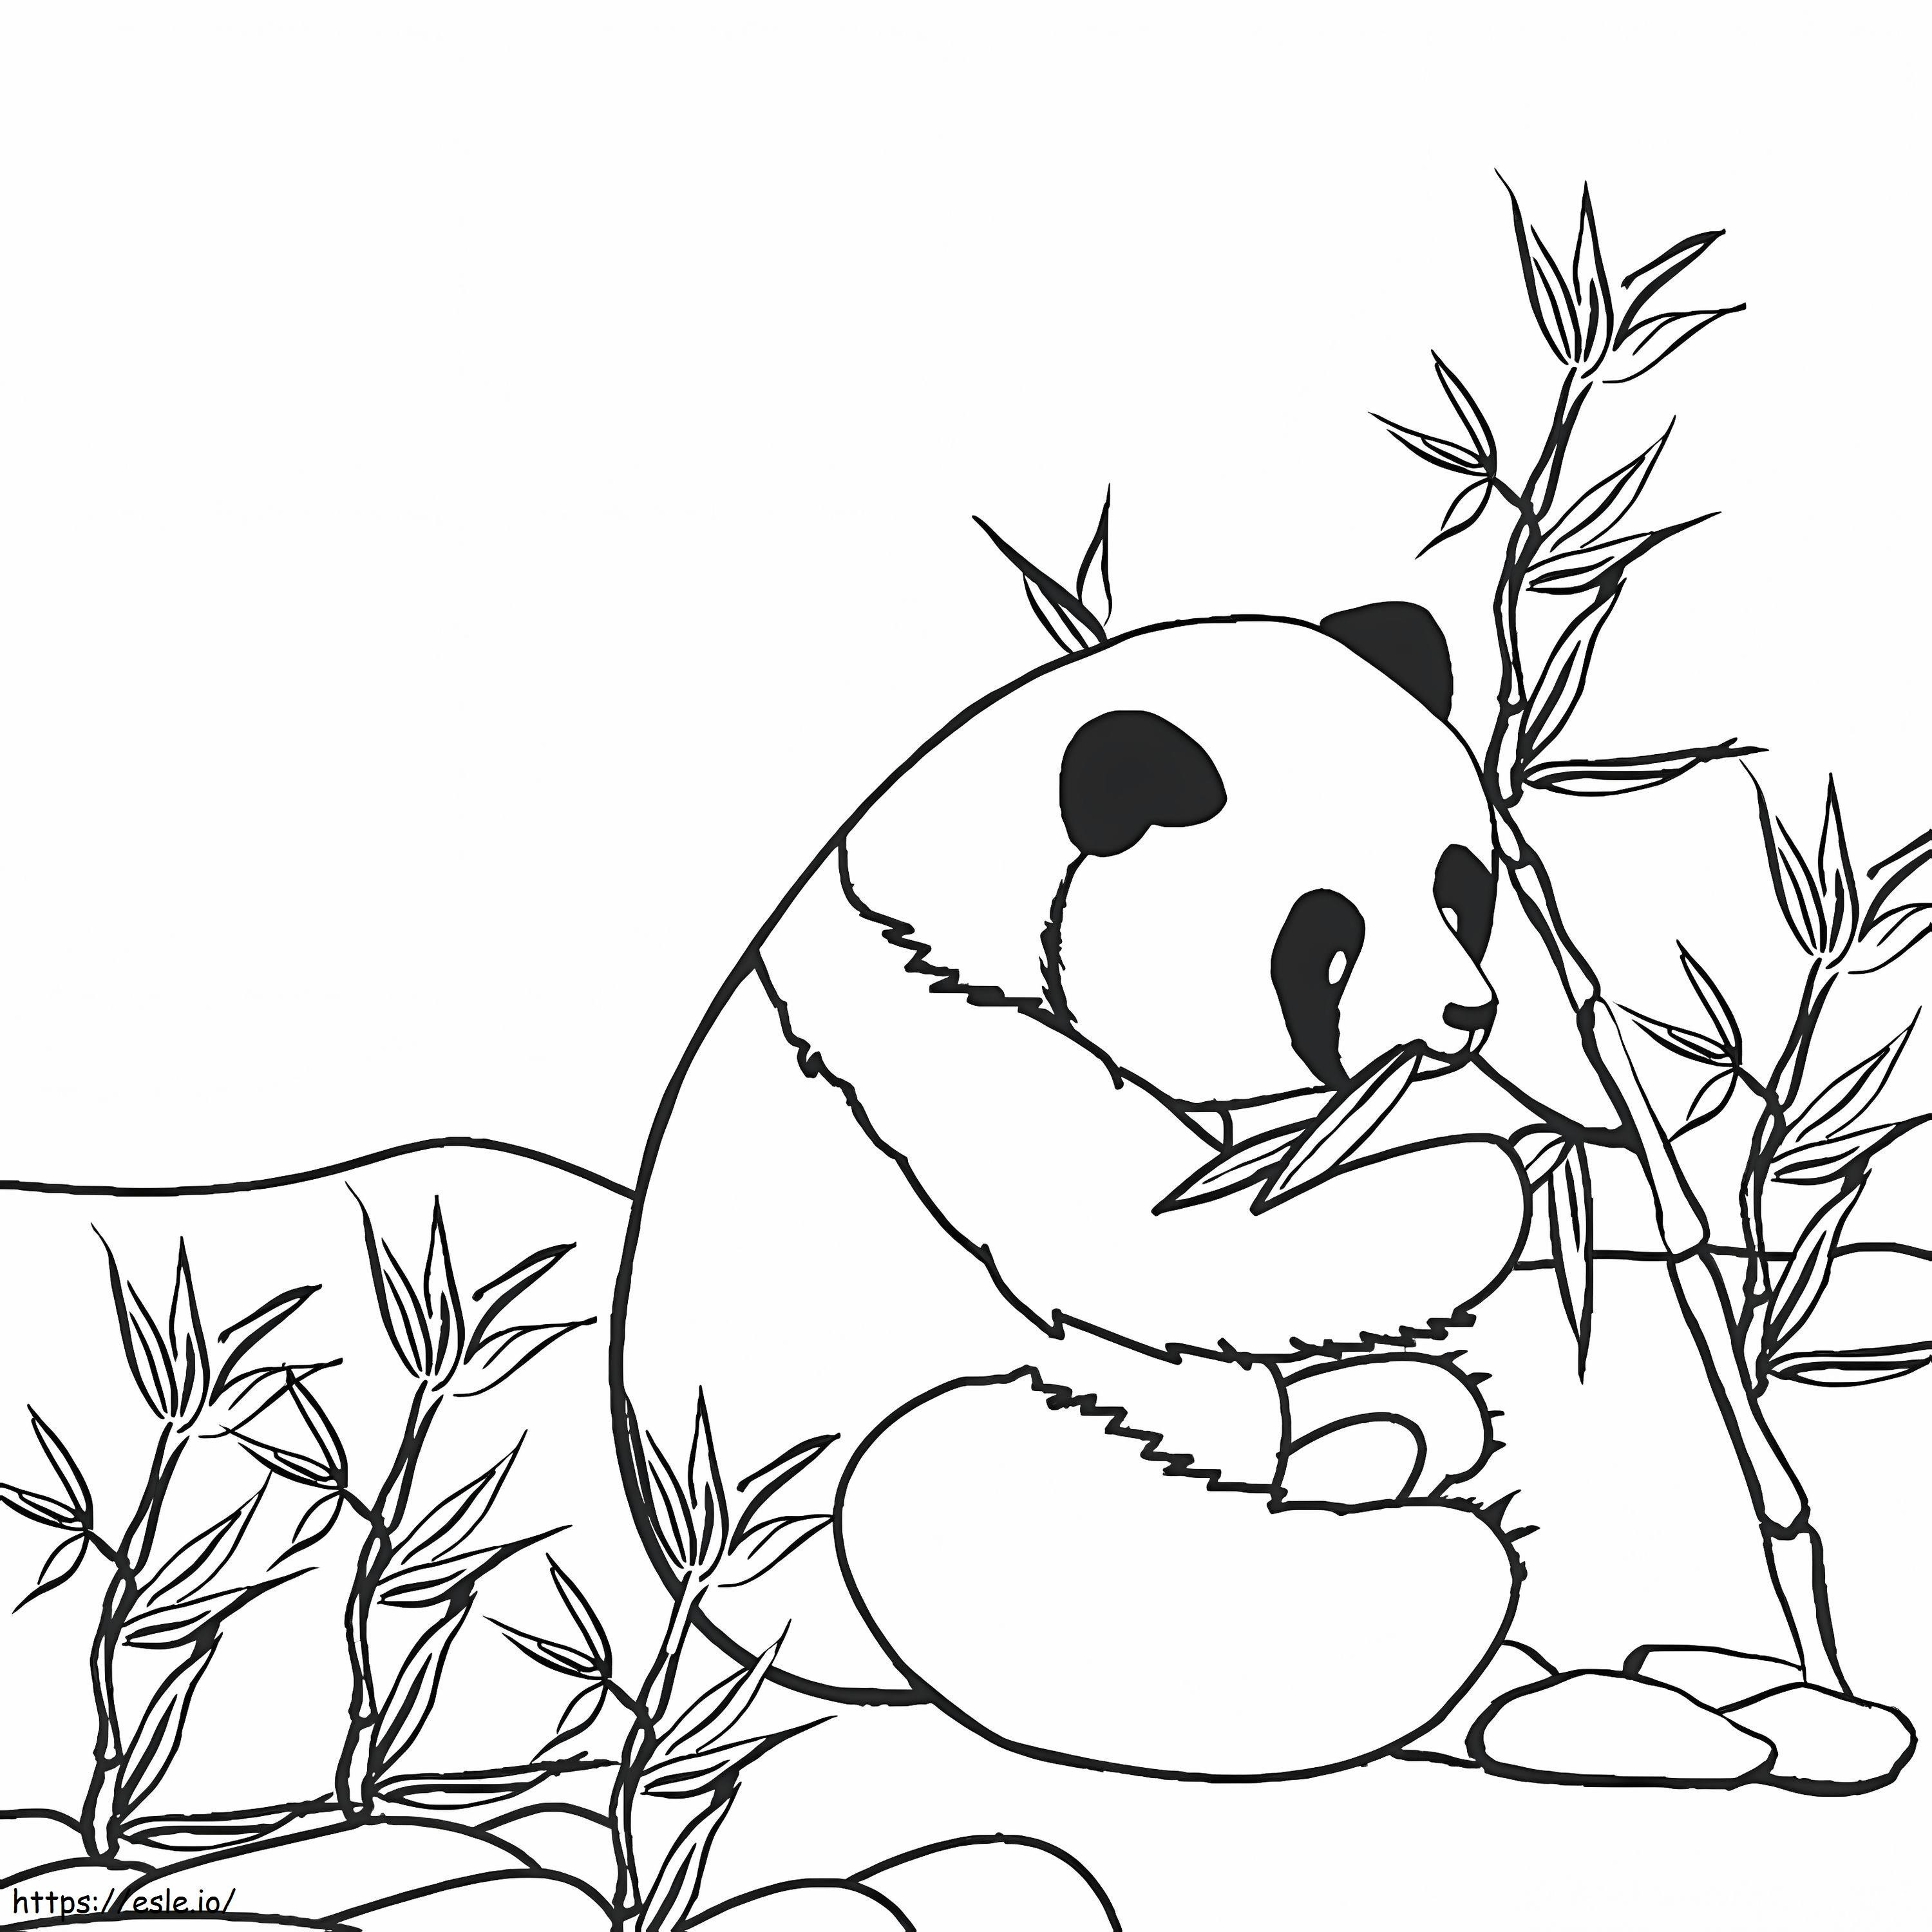 Bambu Yiyen Küçük Panda boyama